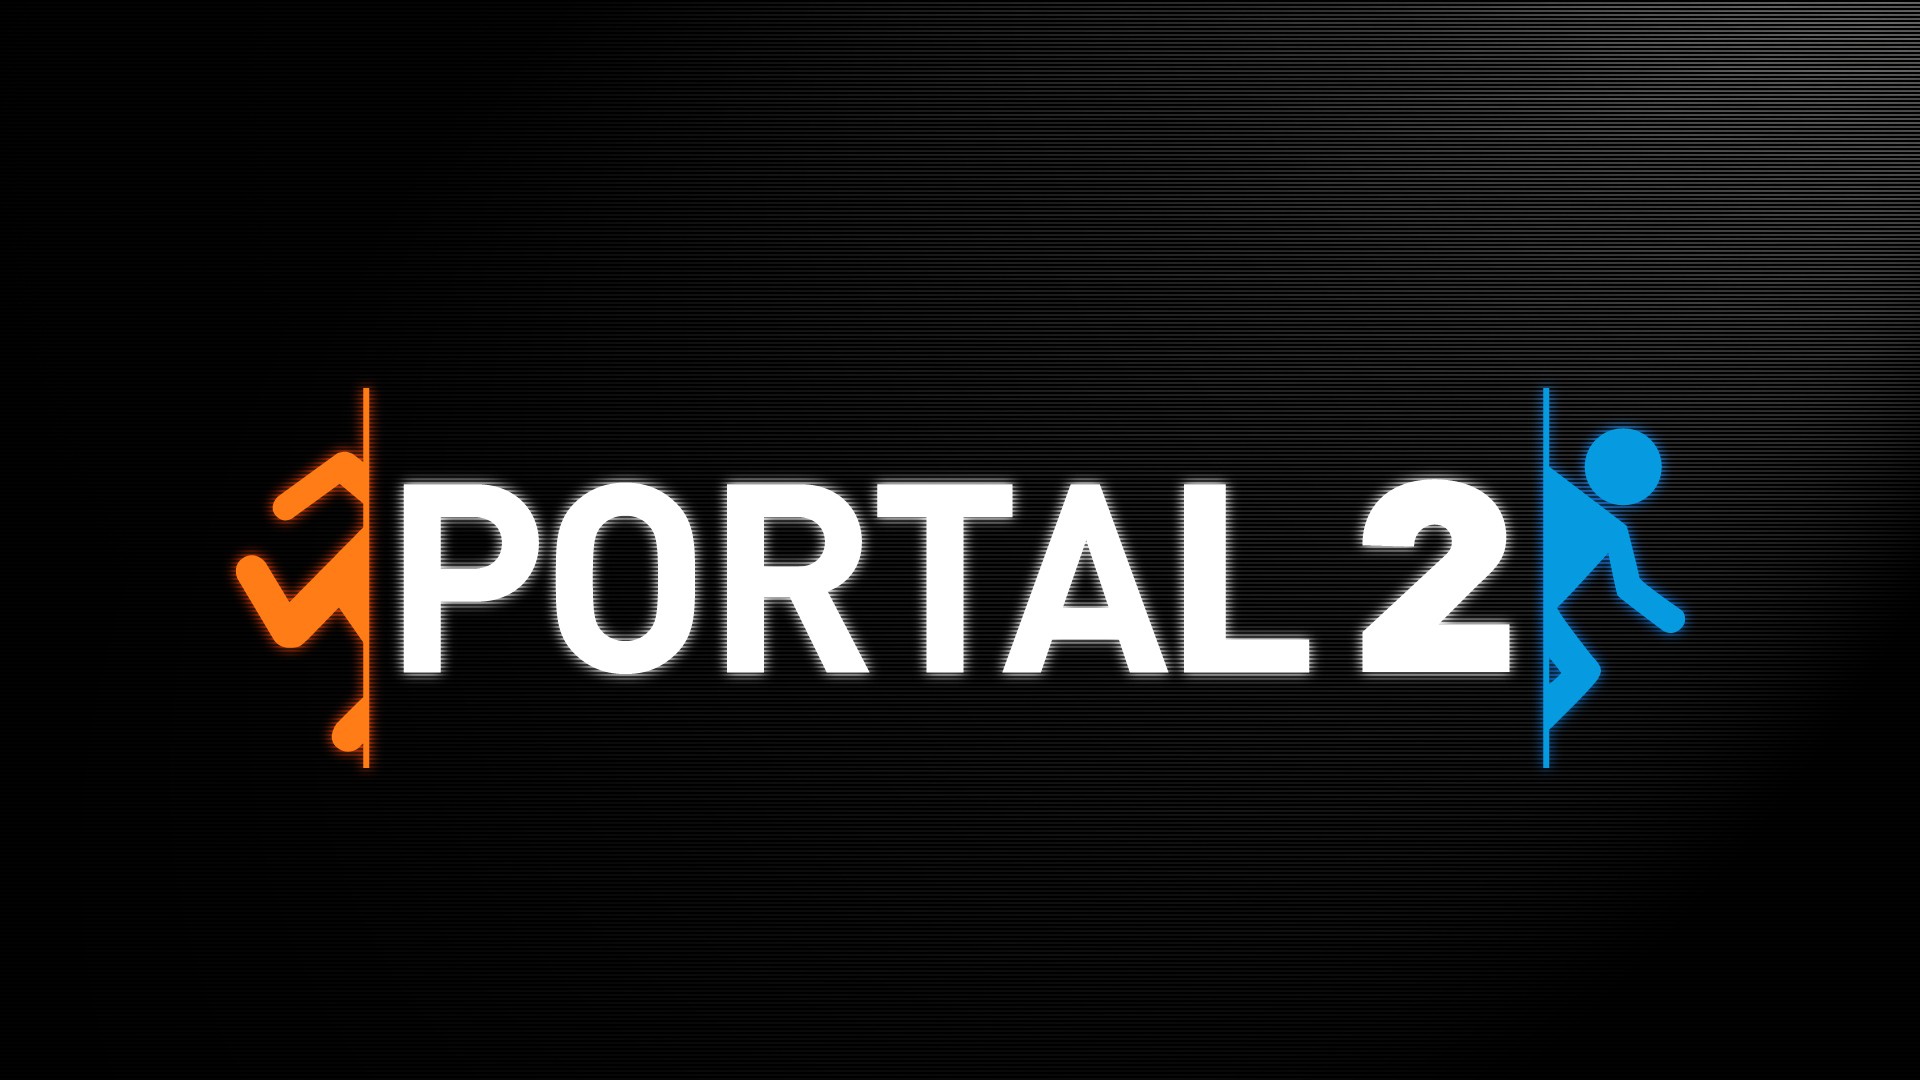 Portal 2, Video Games, Valve, Simple, Black Background, Minimalism, Portal Wallpaper